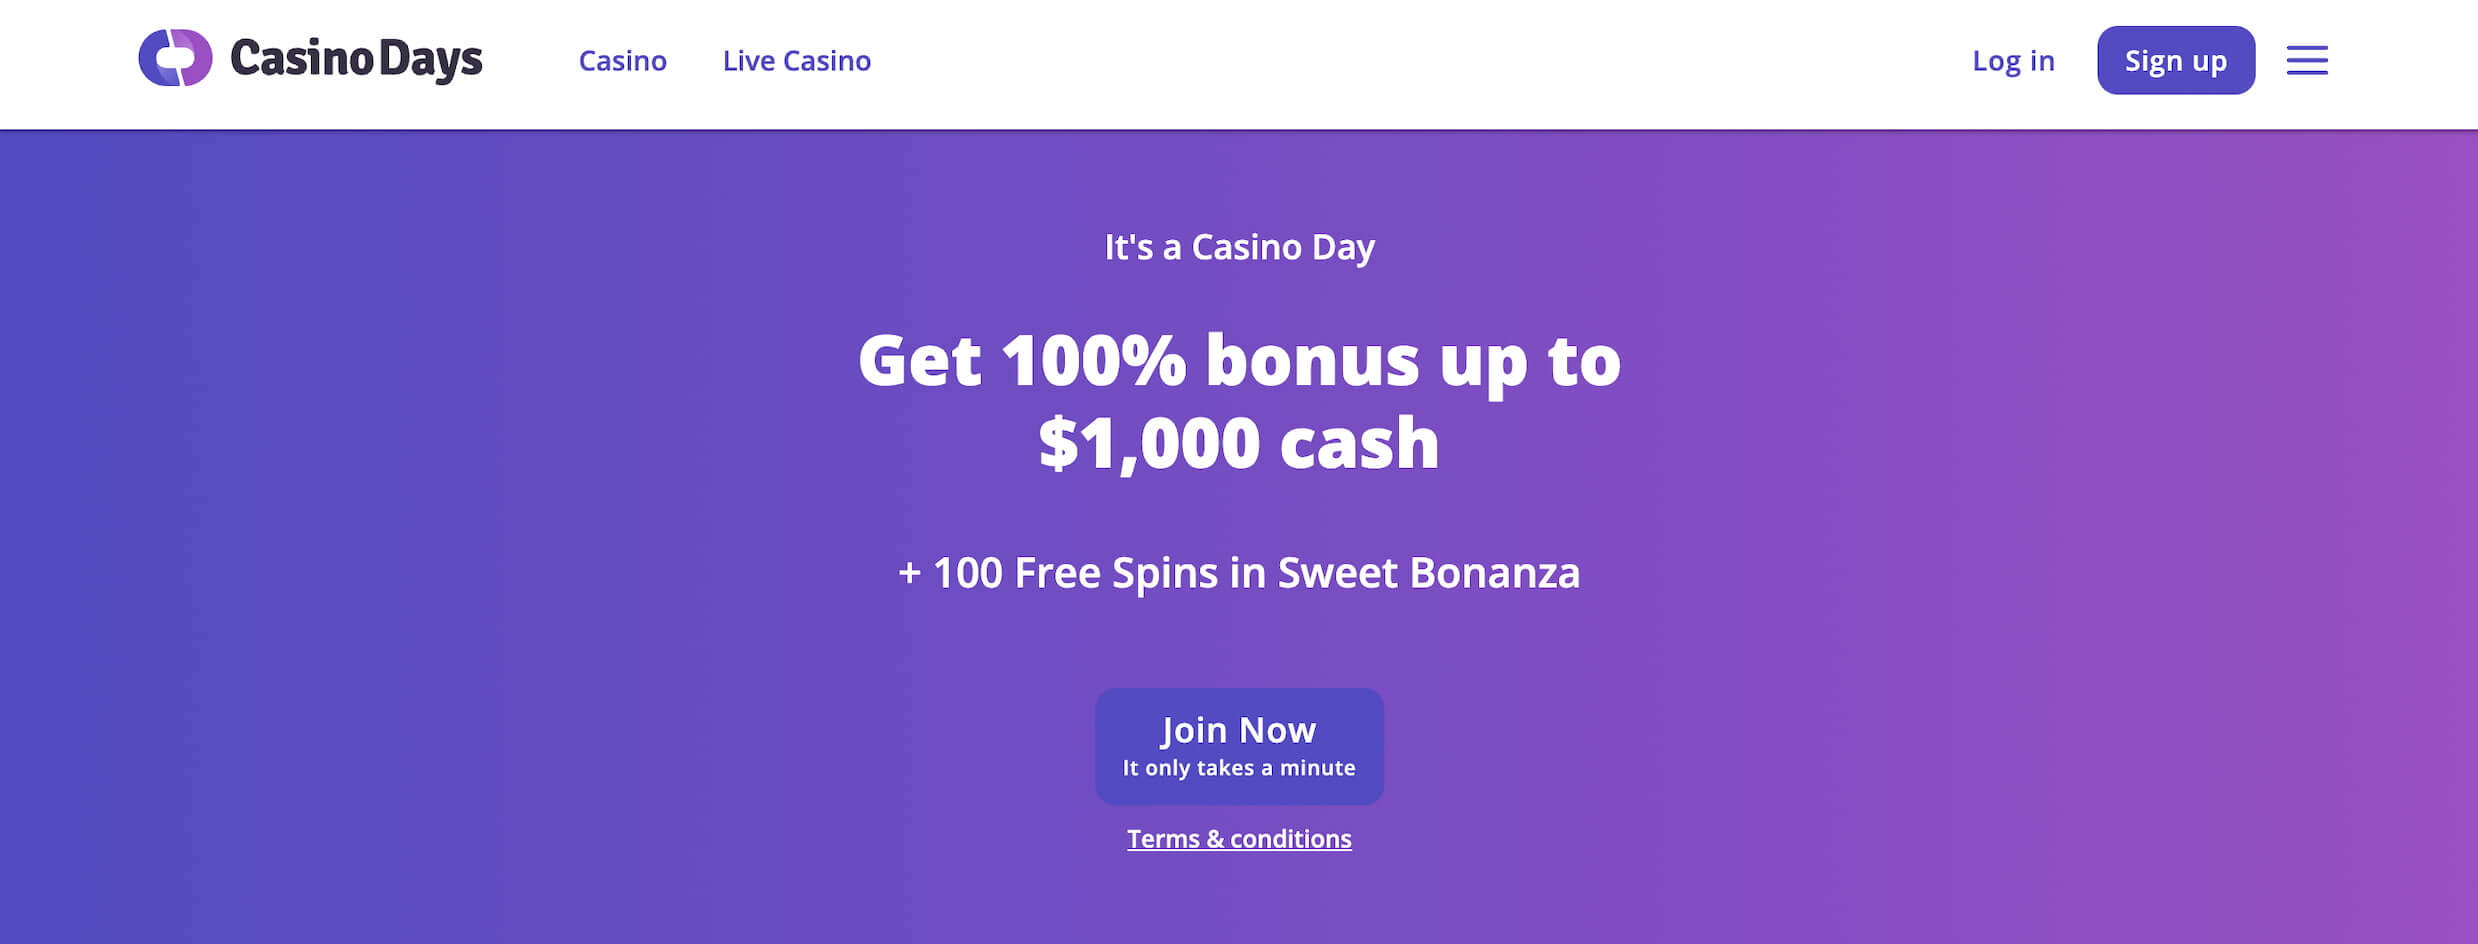 casino days welcome bonus